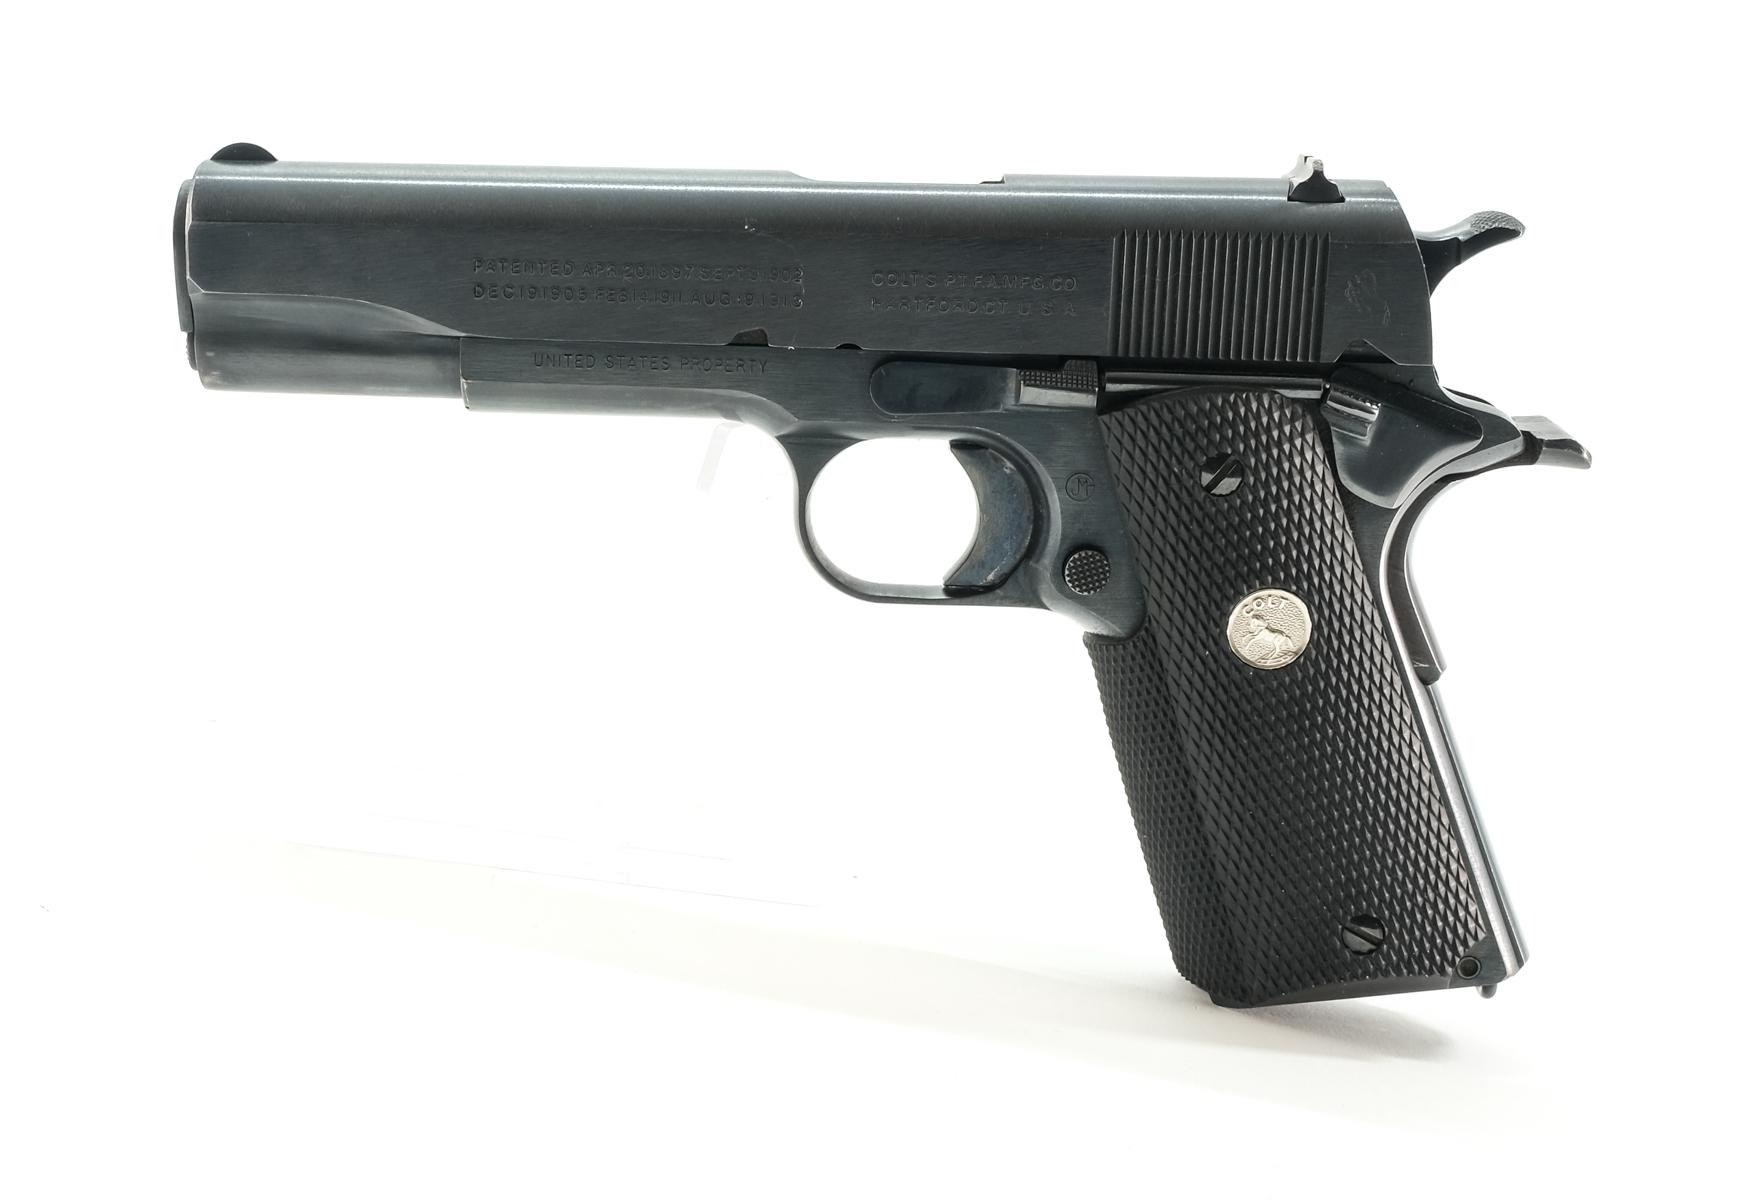 Colt 1911 WWII Reissue 1911 Pistol 45 ACP